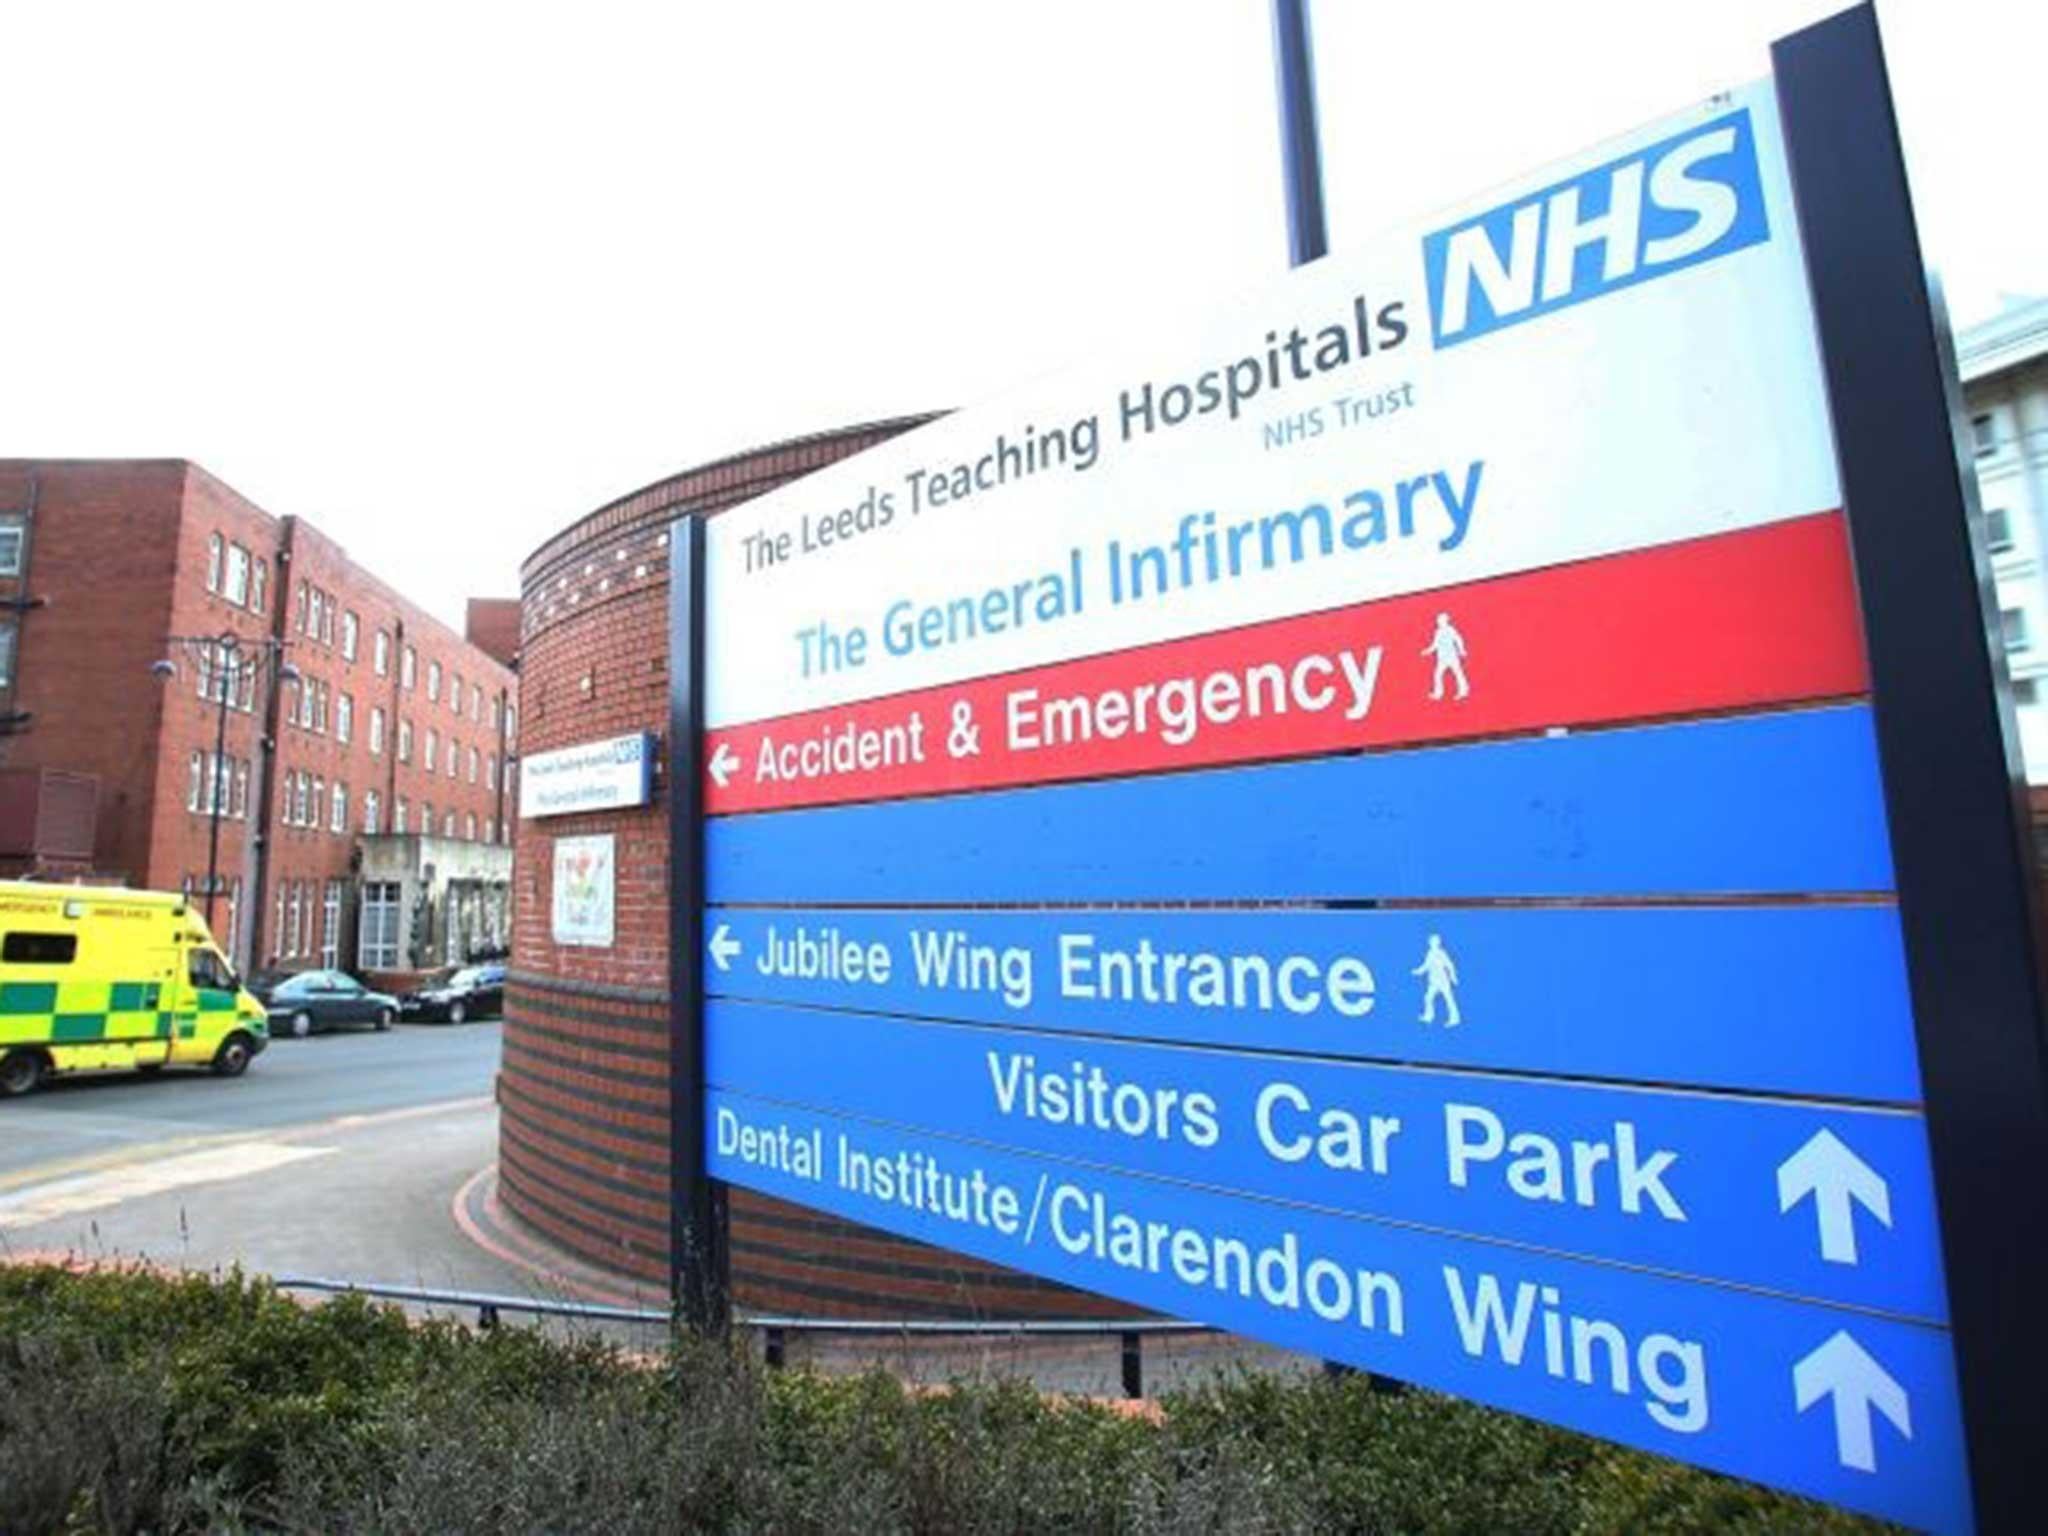 Leeds Teaching Hospitals NHS Trust is facing unprecedented pressure